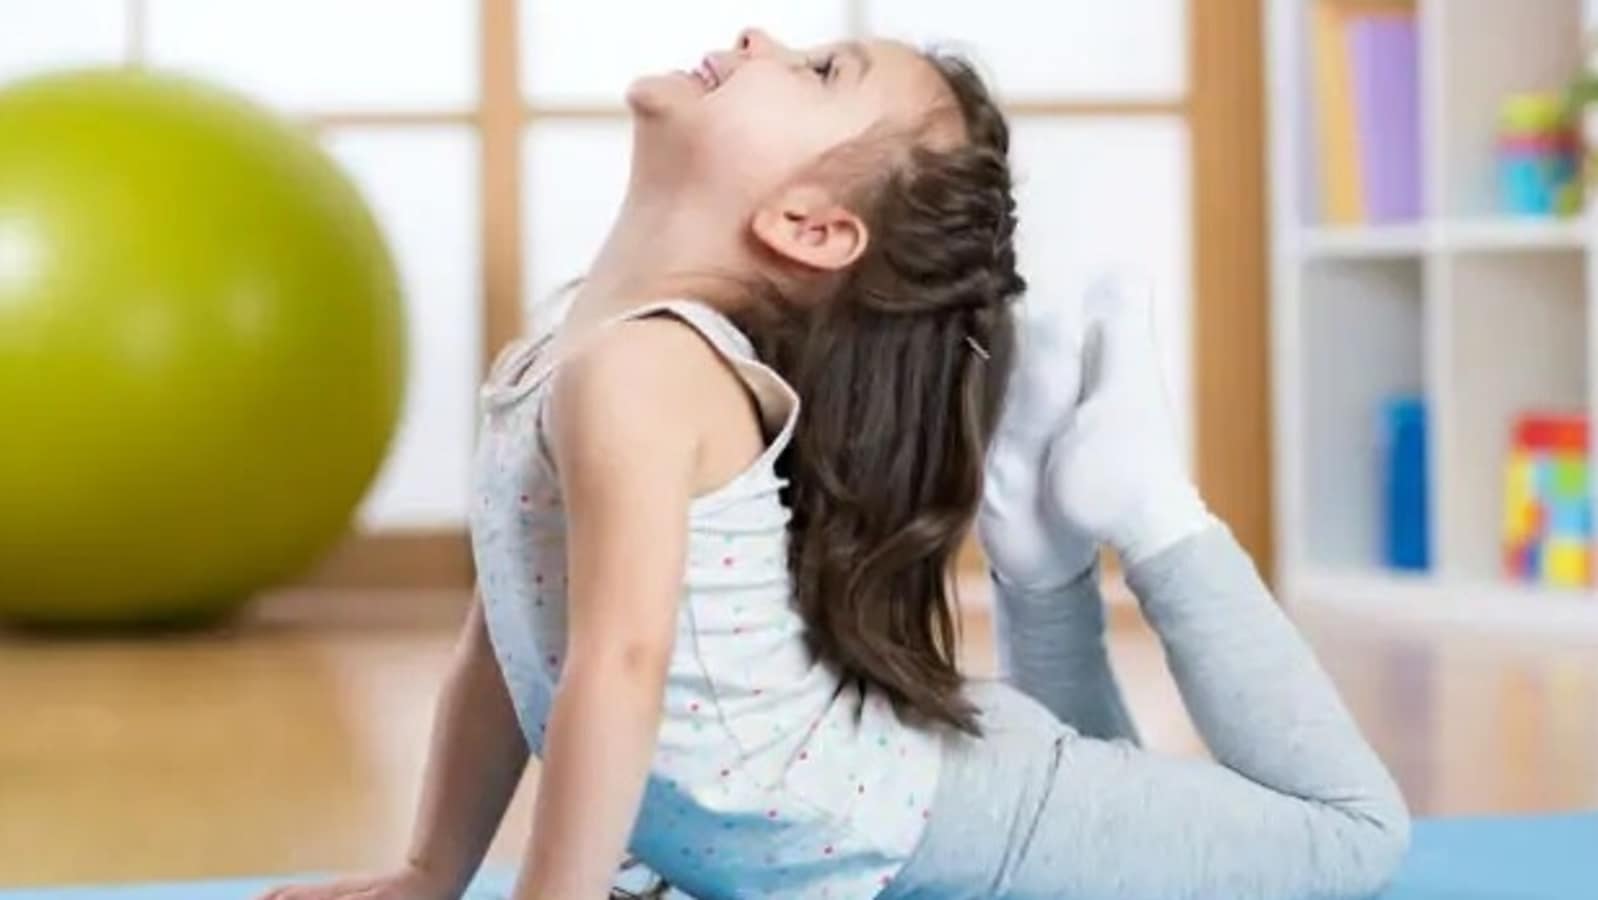 58 Fun and Easy Yoga Poses for Kids (+ Printable Posters)